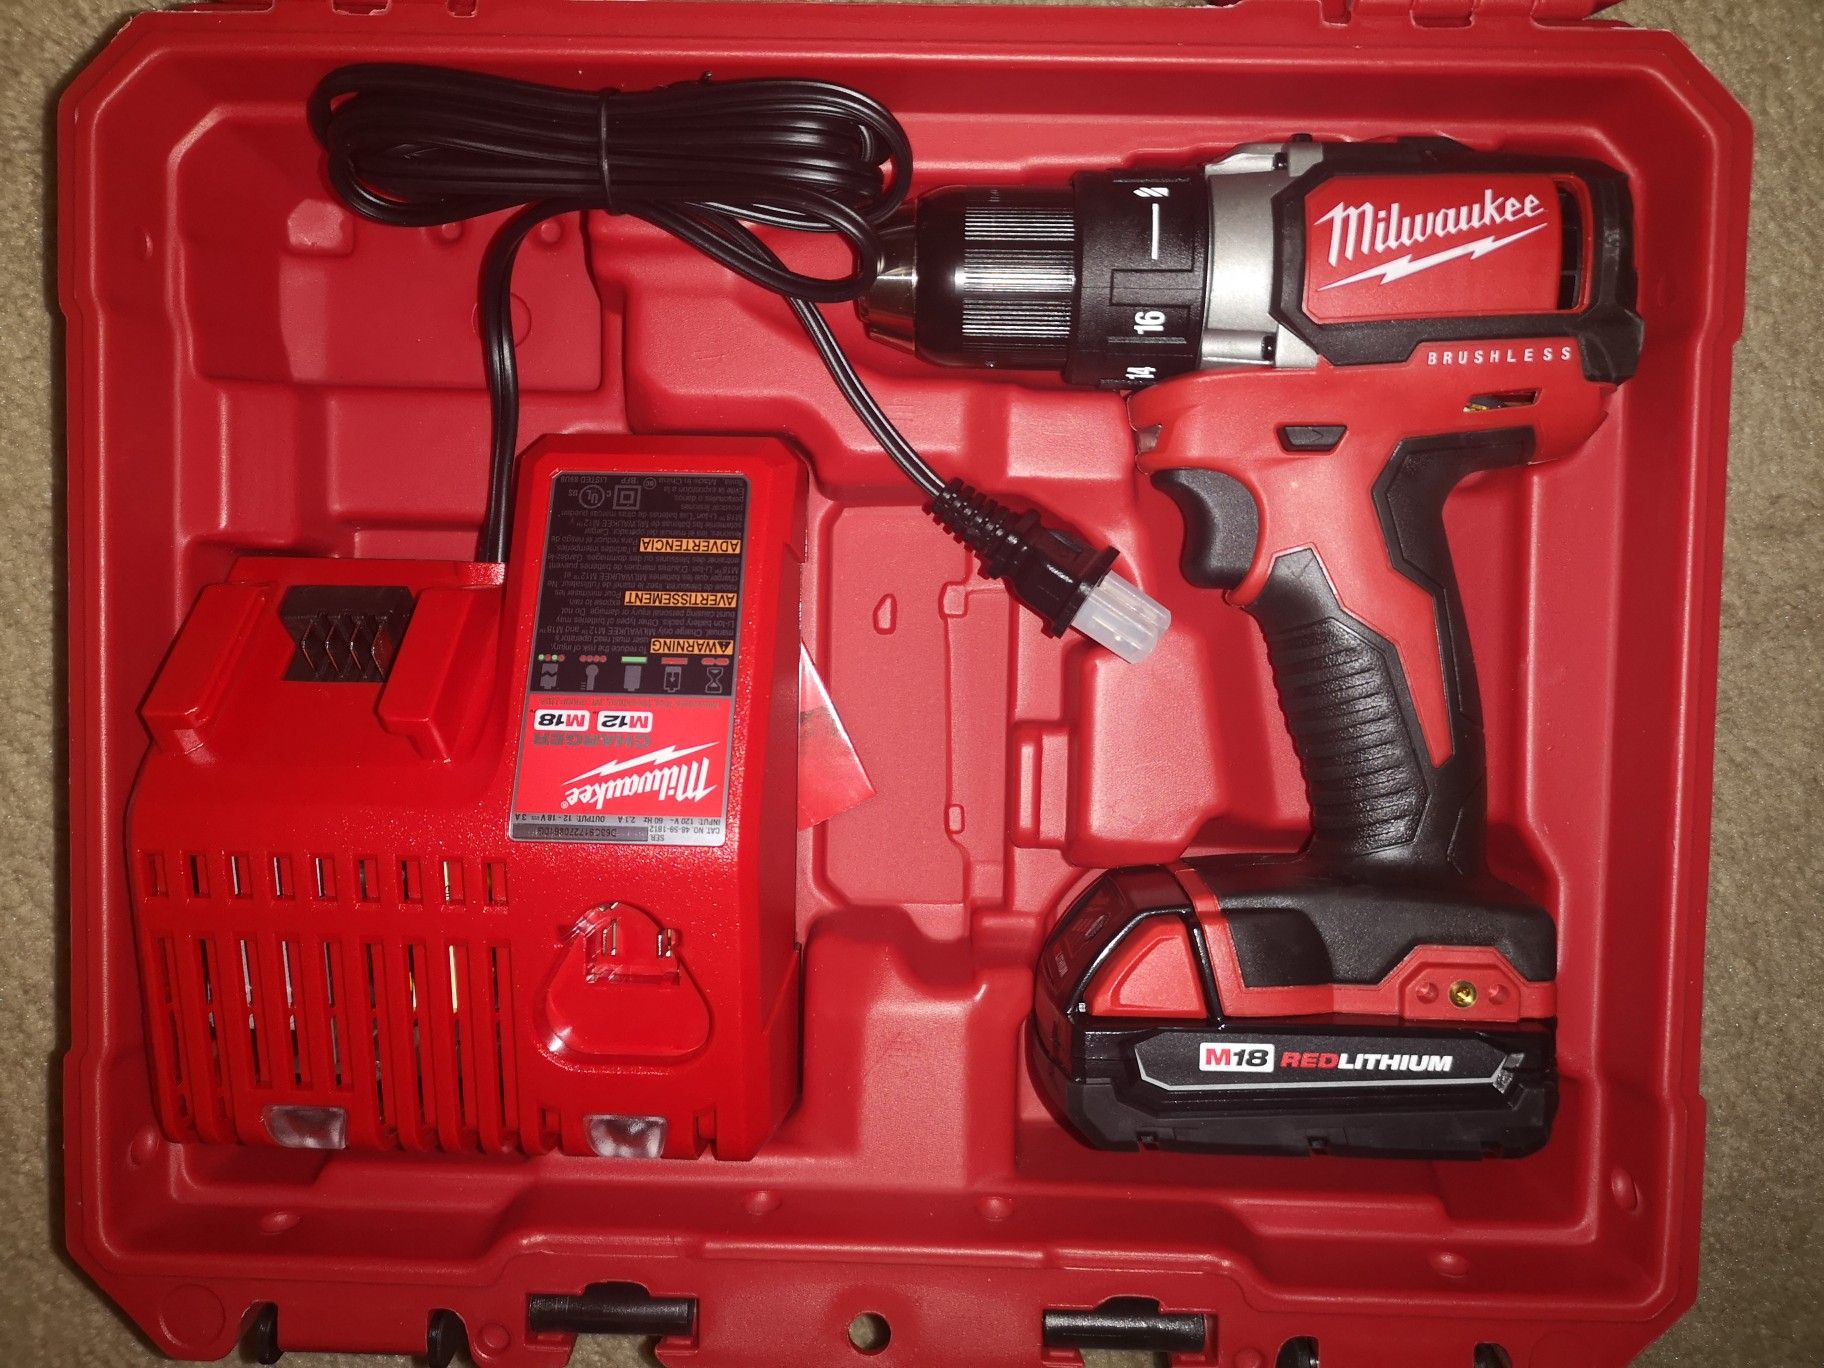 Milwaukee 2701-22CT M18 1/2" Compact Brushless Drill/Driver Kit